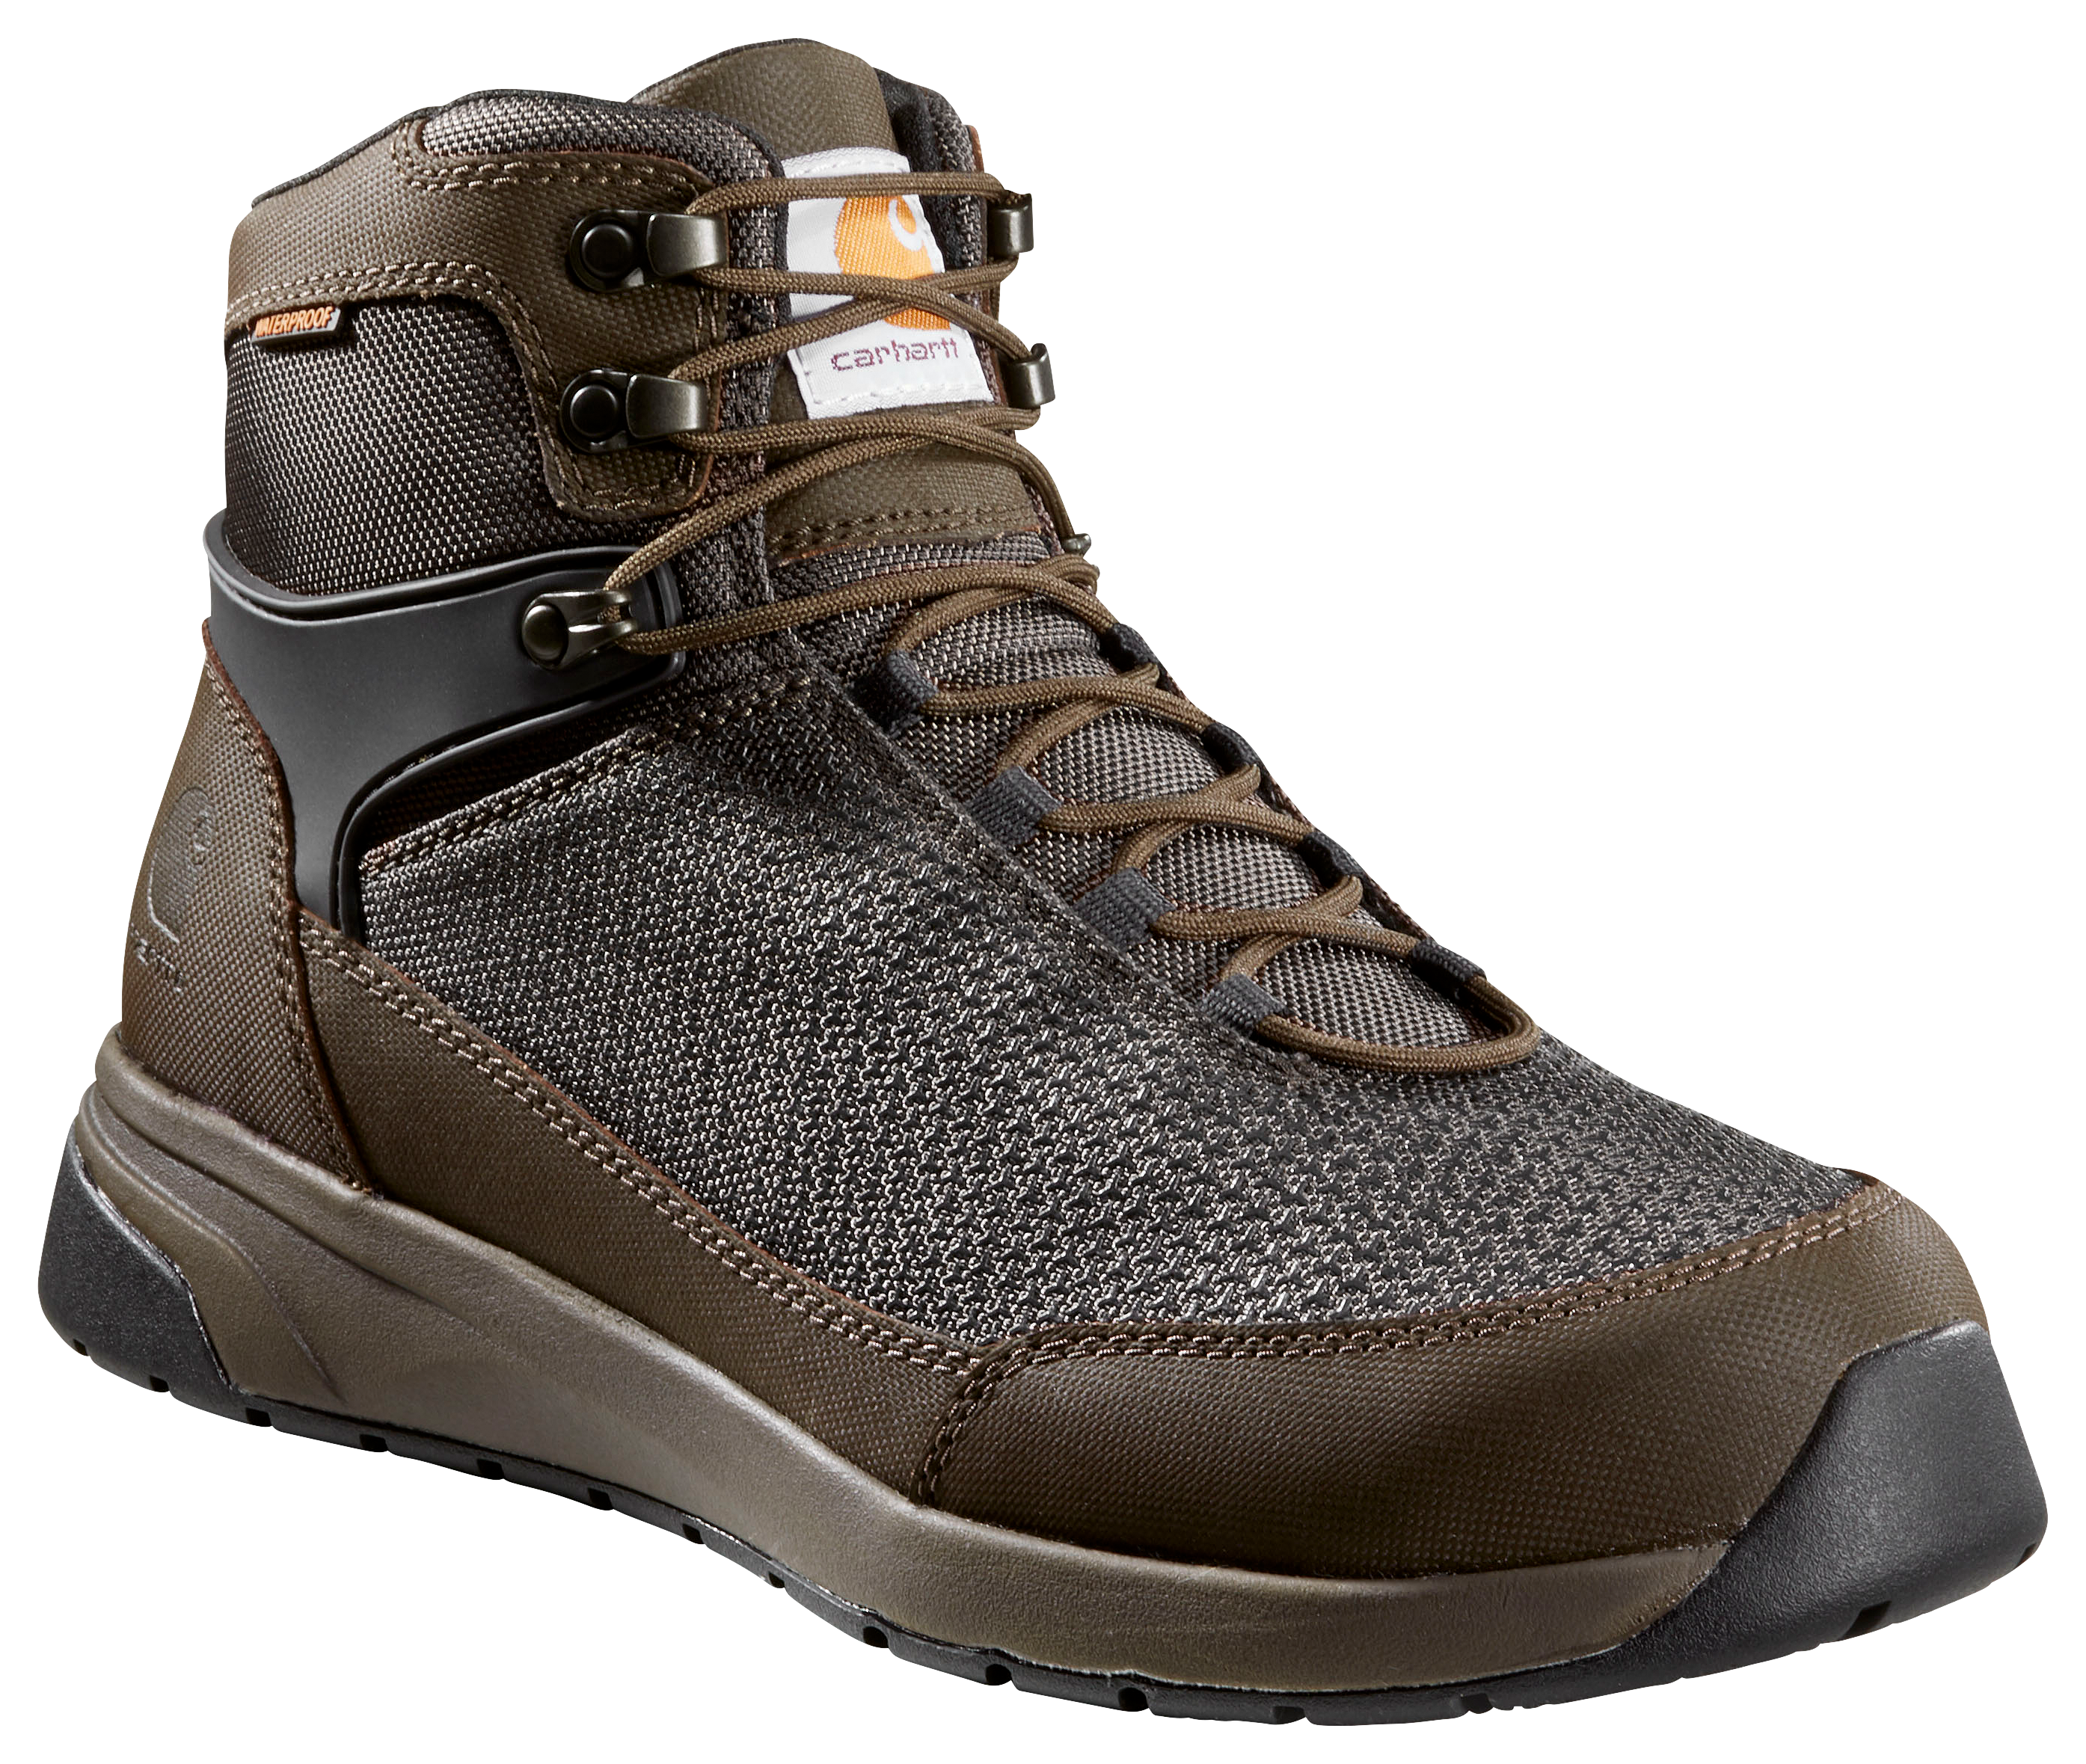 Carhartt Force 6"" Nano Composite-Toe Work Boots for Men - Espresso - 13W